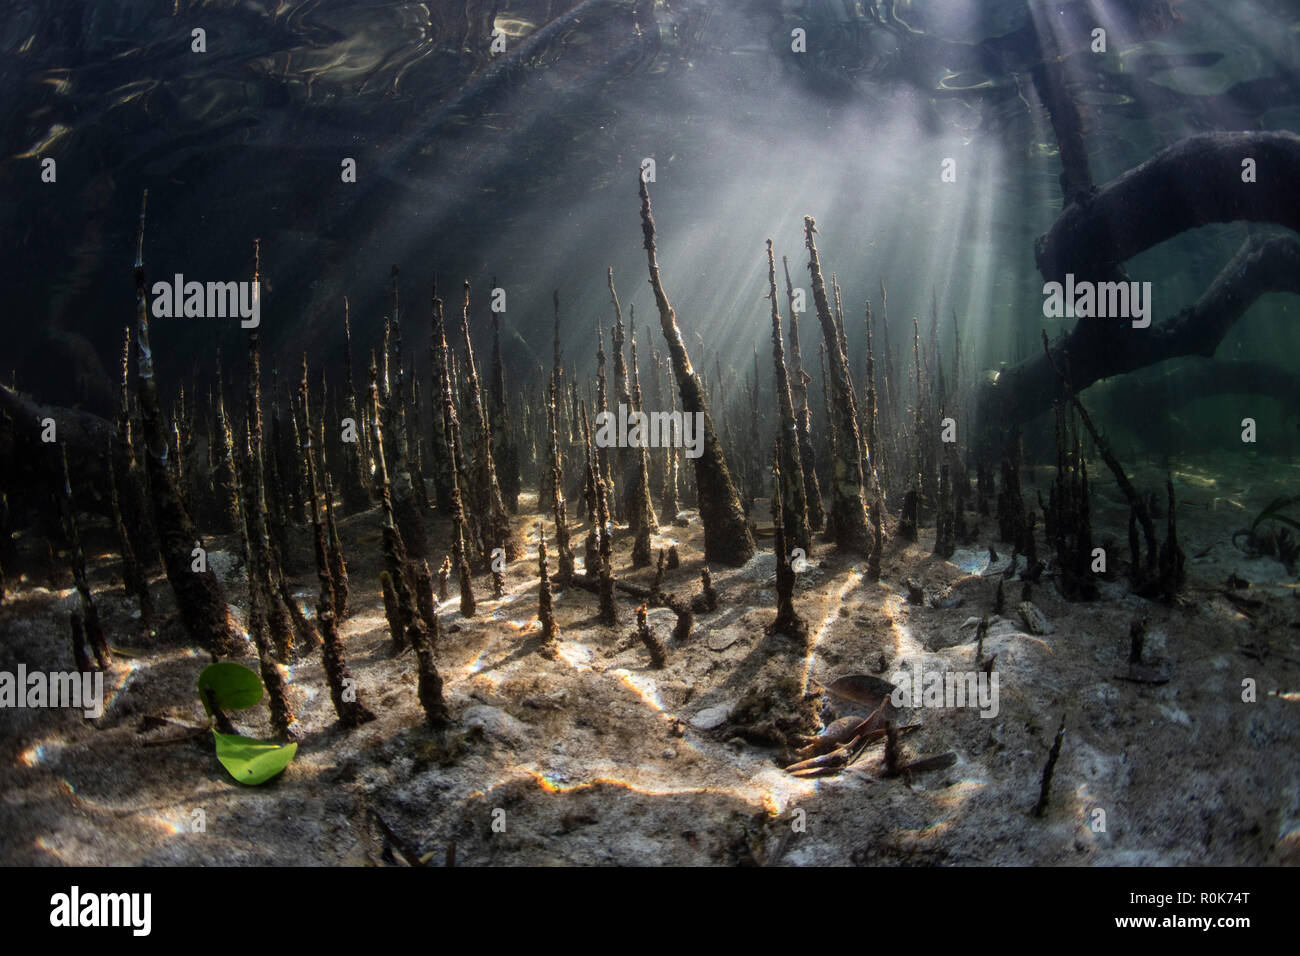 Spezialisierte Mangrovenwurzeln, namens pneumatophores, steigen aus dem flachen Meeresboden. Stockfoto